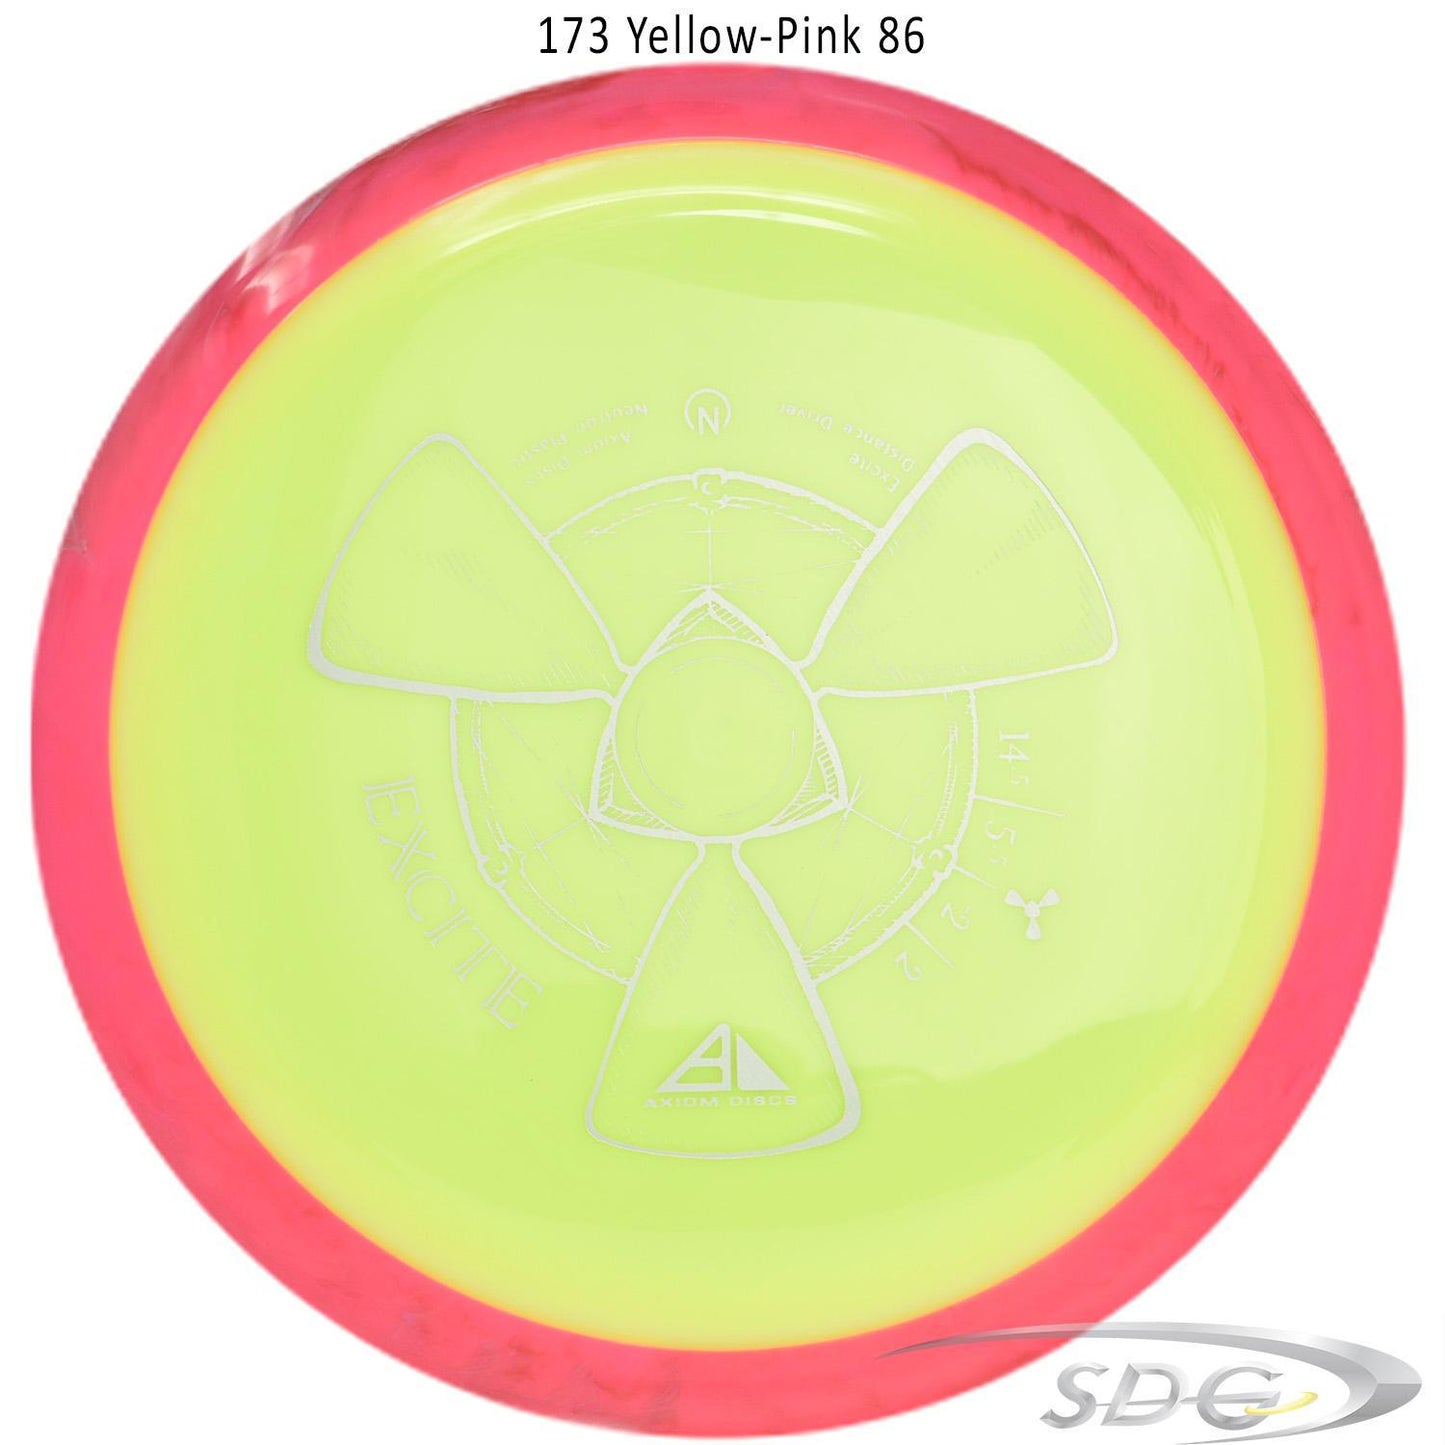 axiom-neutron-excite-disc-golf-distance-driver 173 Yellow-Pink  86 